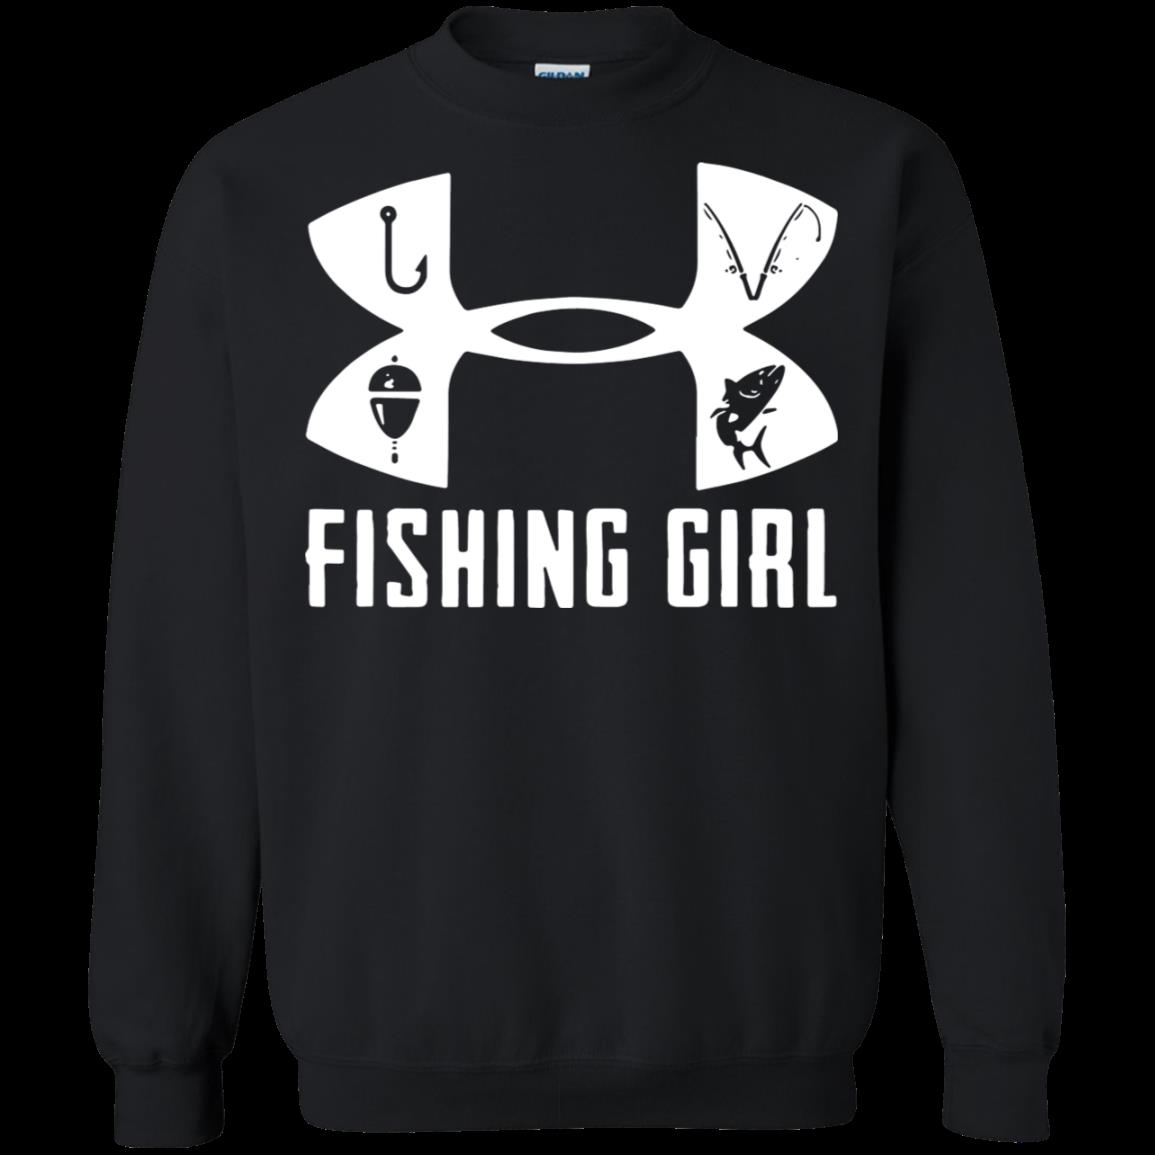 Under Armour Fishing Girl Shirt Sweatshirt funny shirts, gift